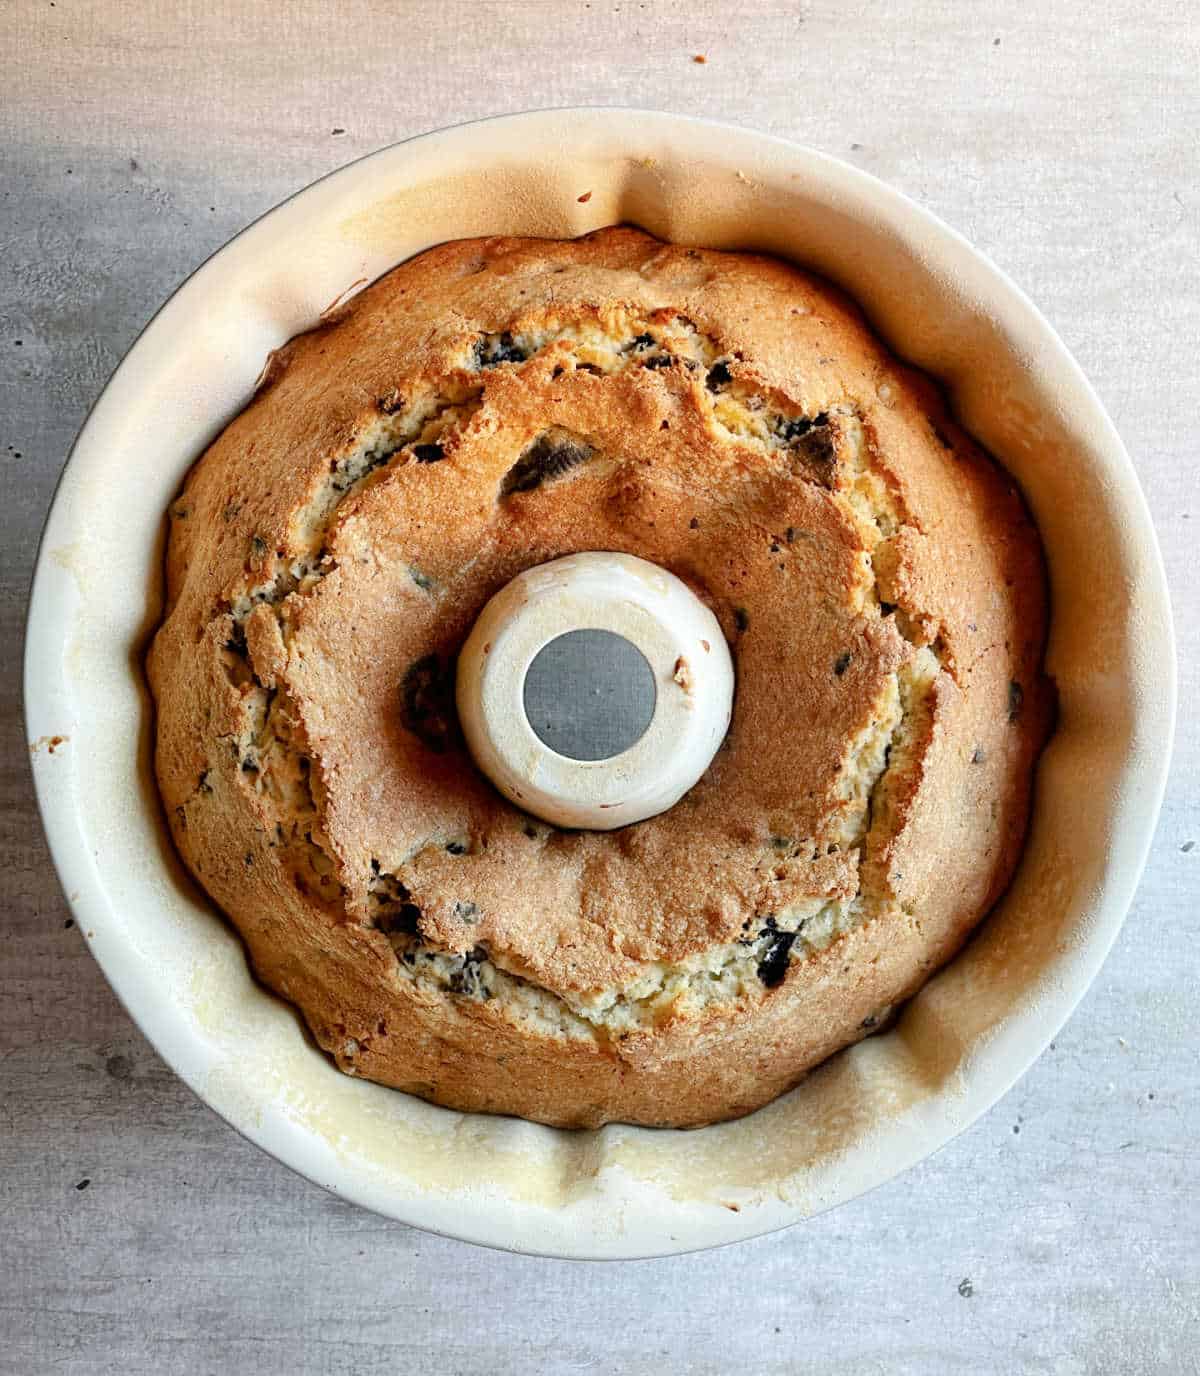 Baked vanilla oreo bundt cake in white pan on a grey surface.